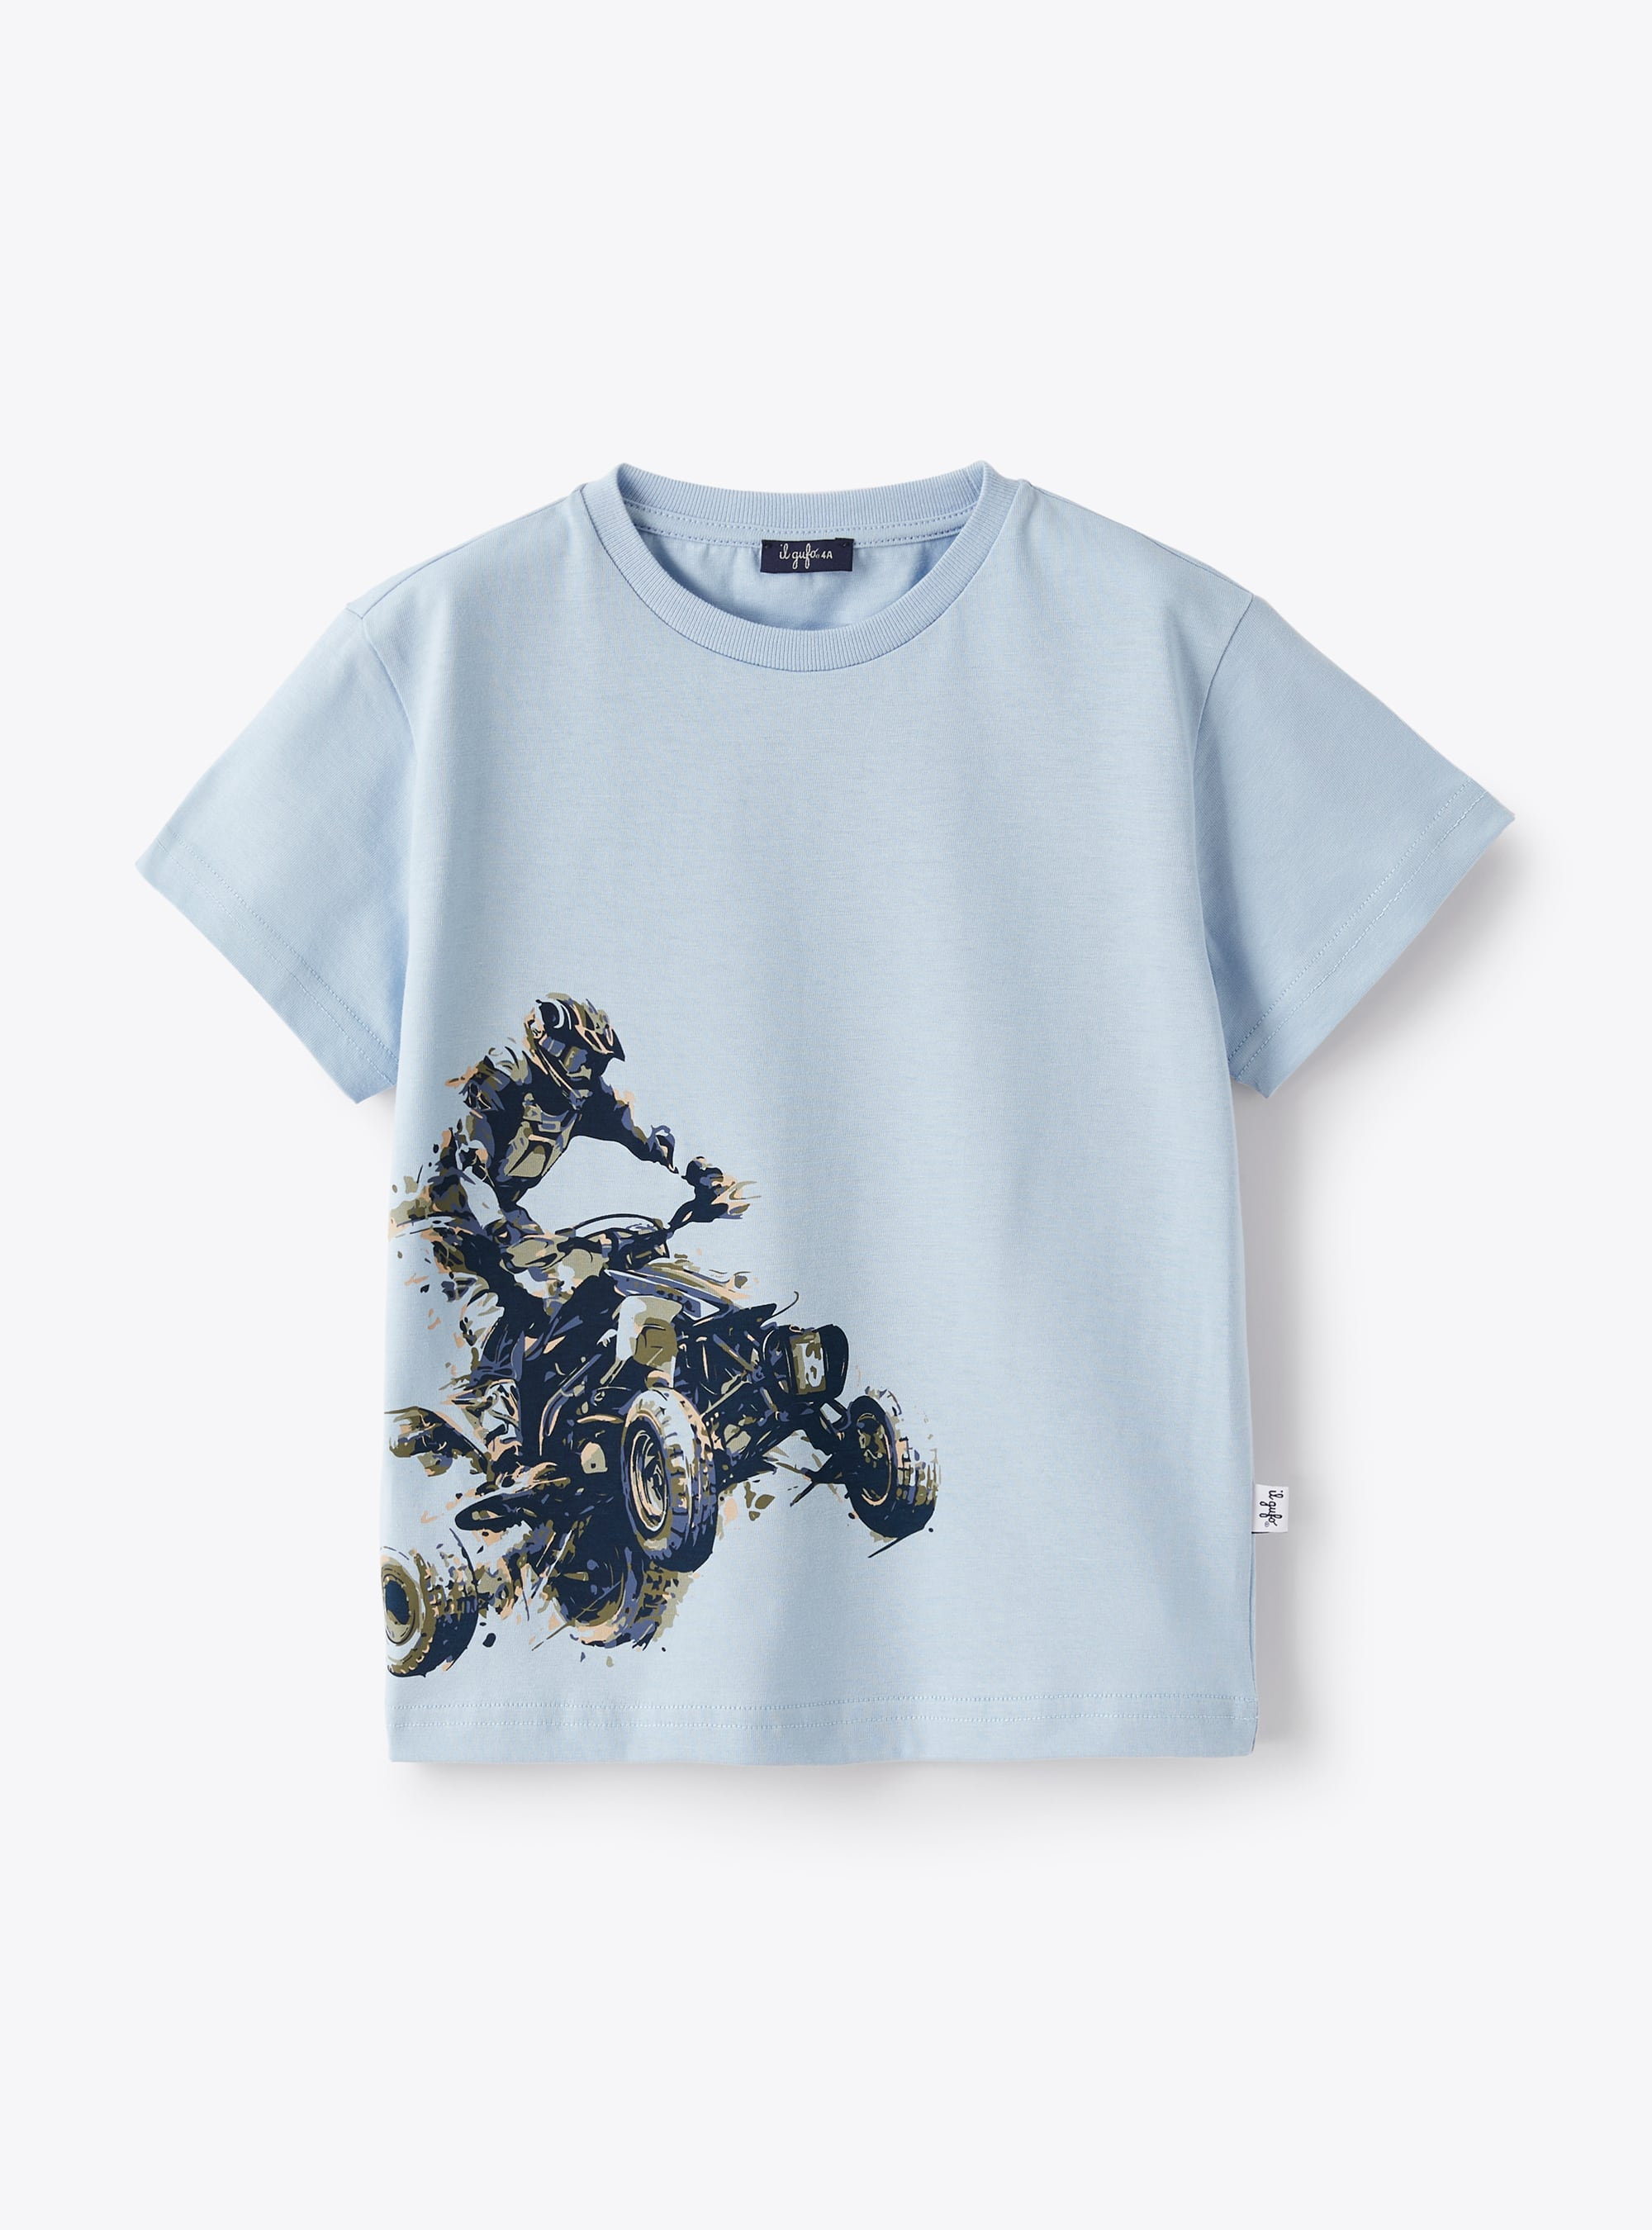 Jersey t-shirt in light blue with quad bike print - T-shirts - Il Gufo